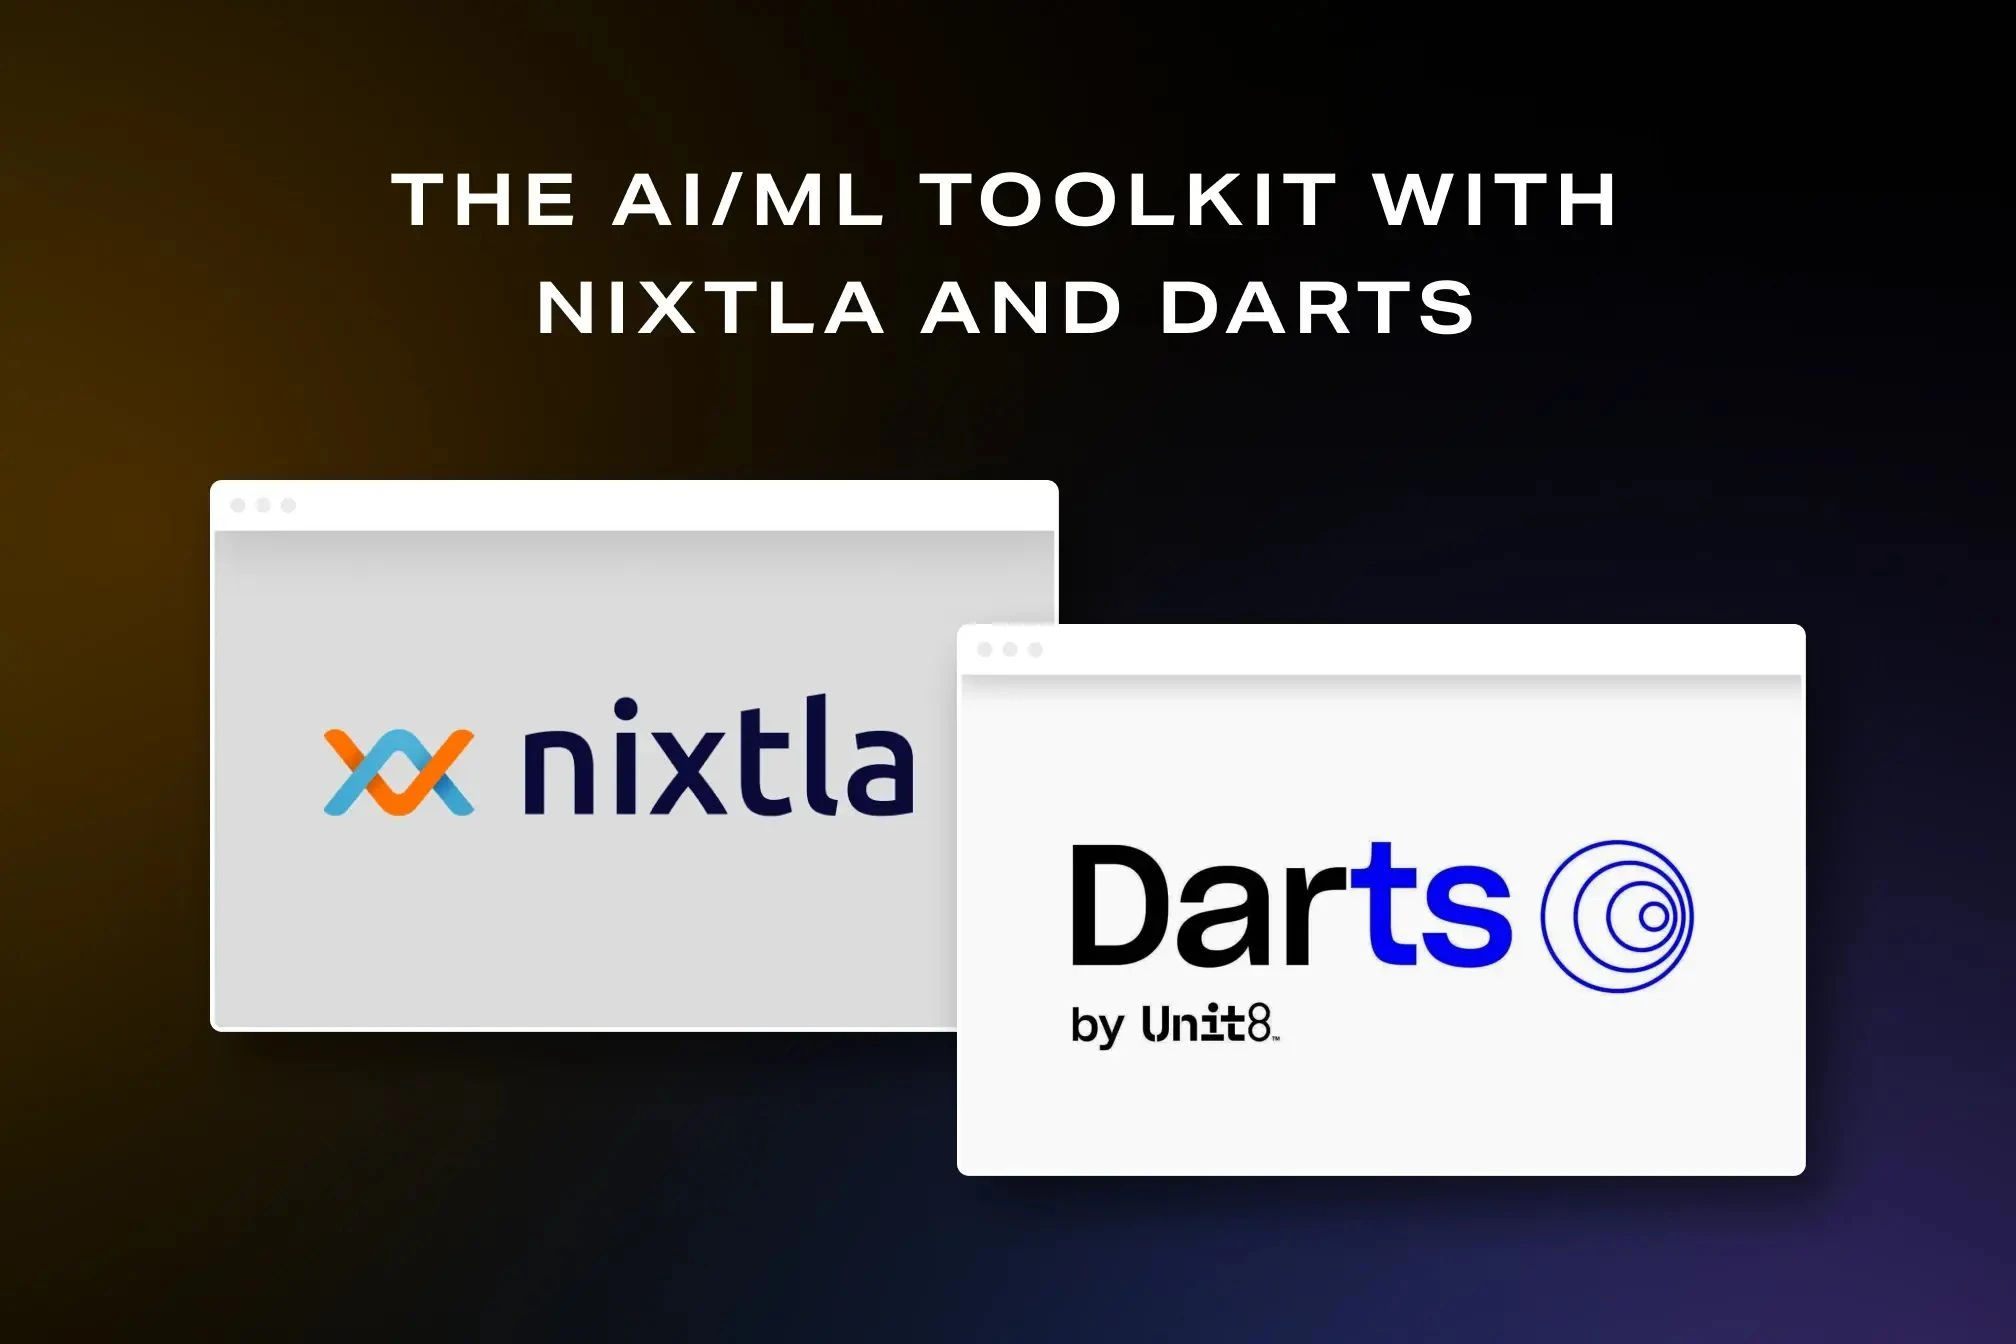 The AI/ML Toolkit with Darts and Nixtla